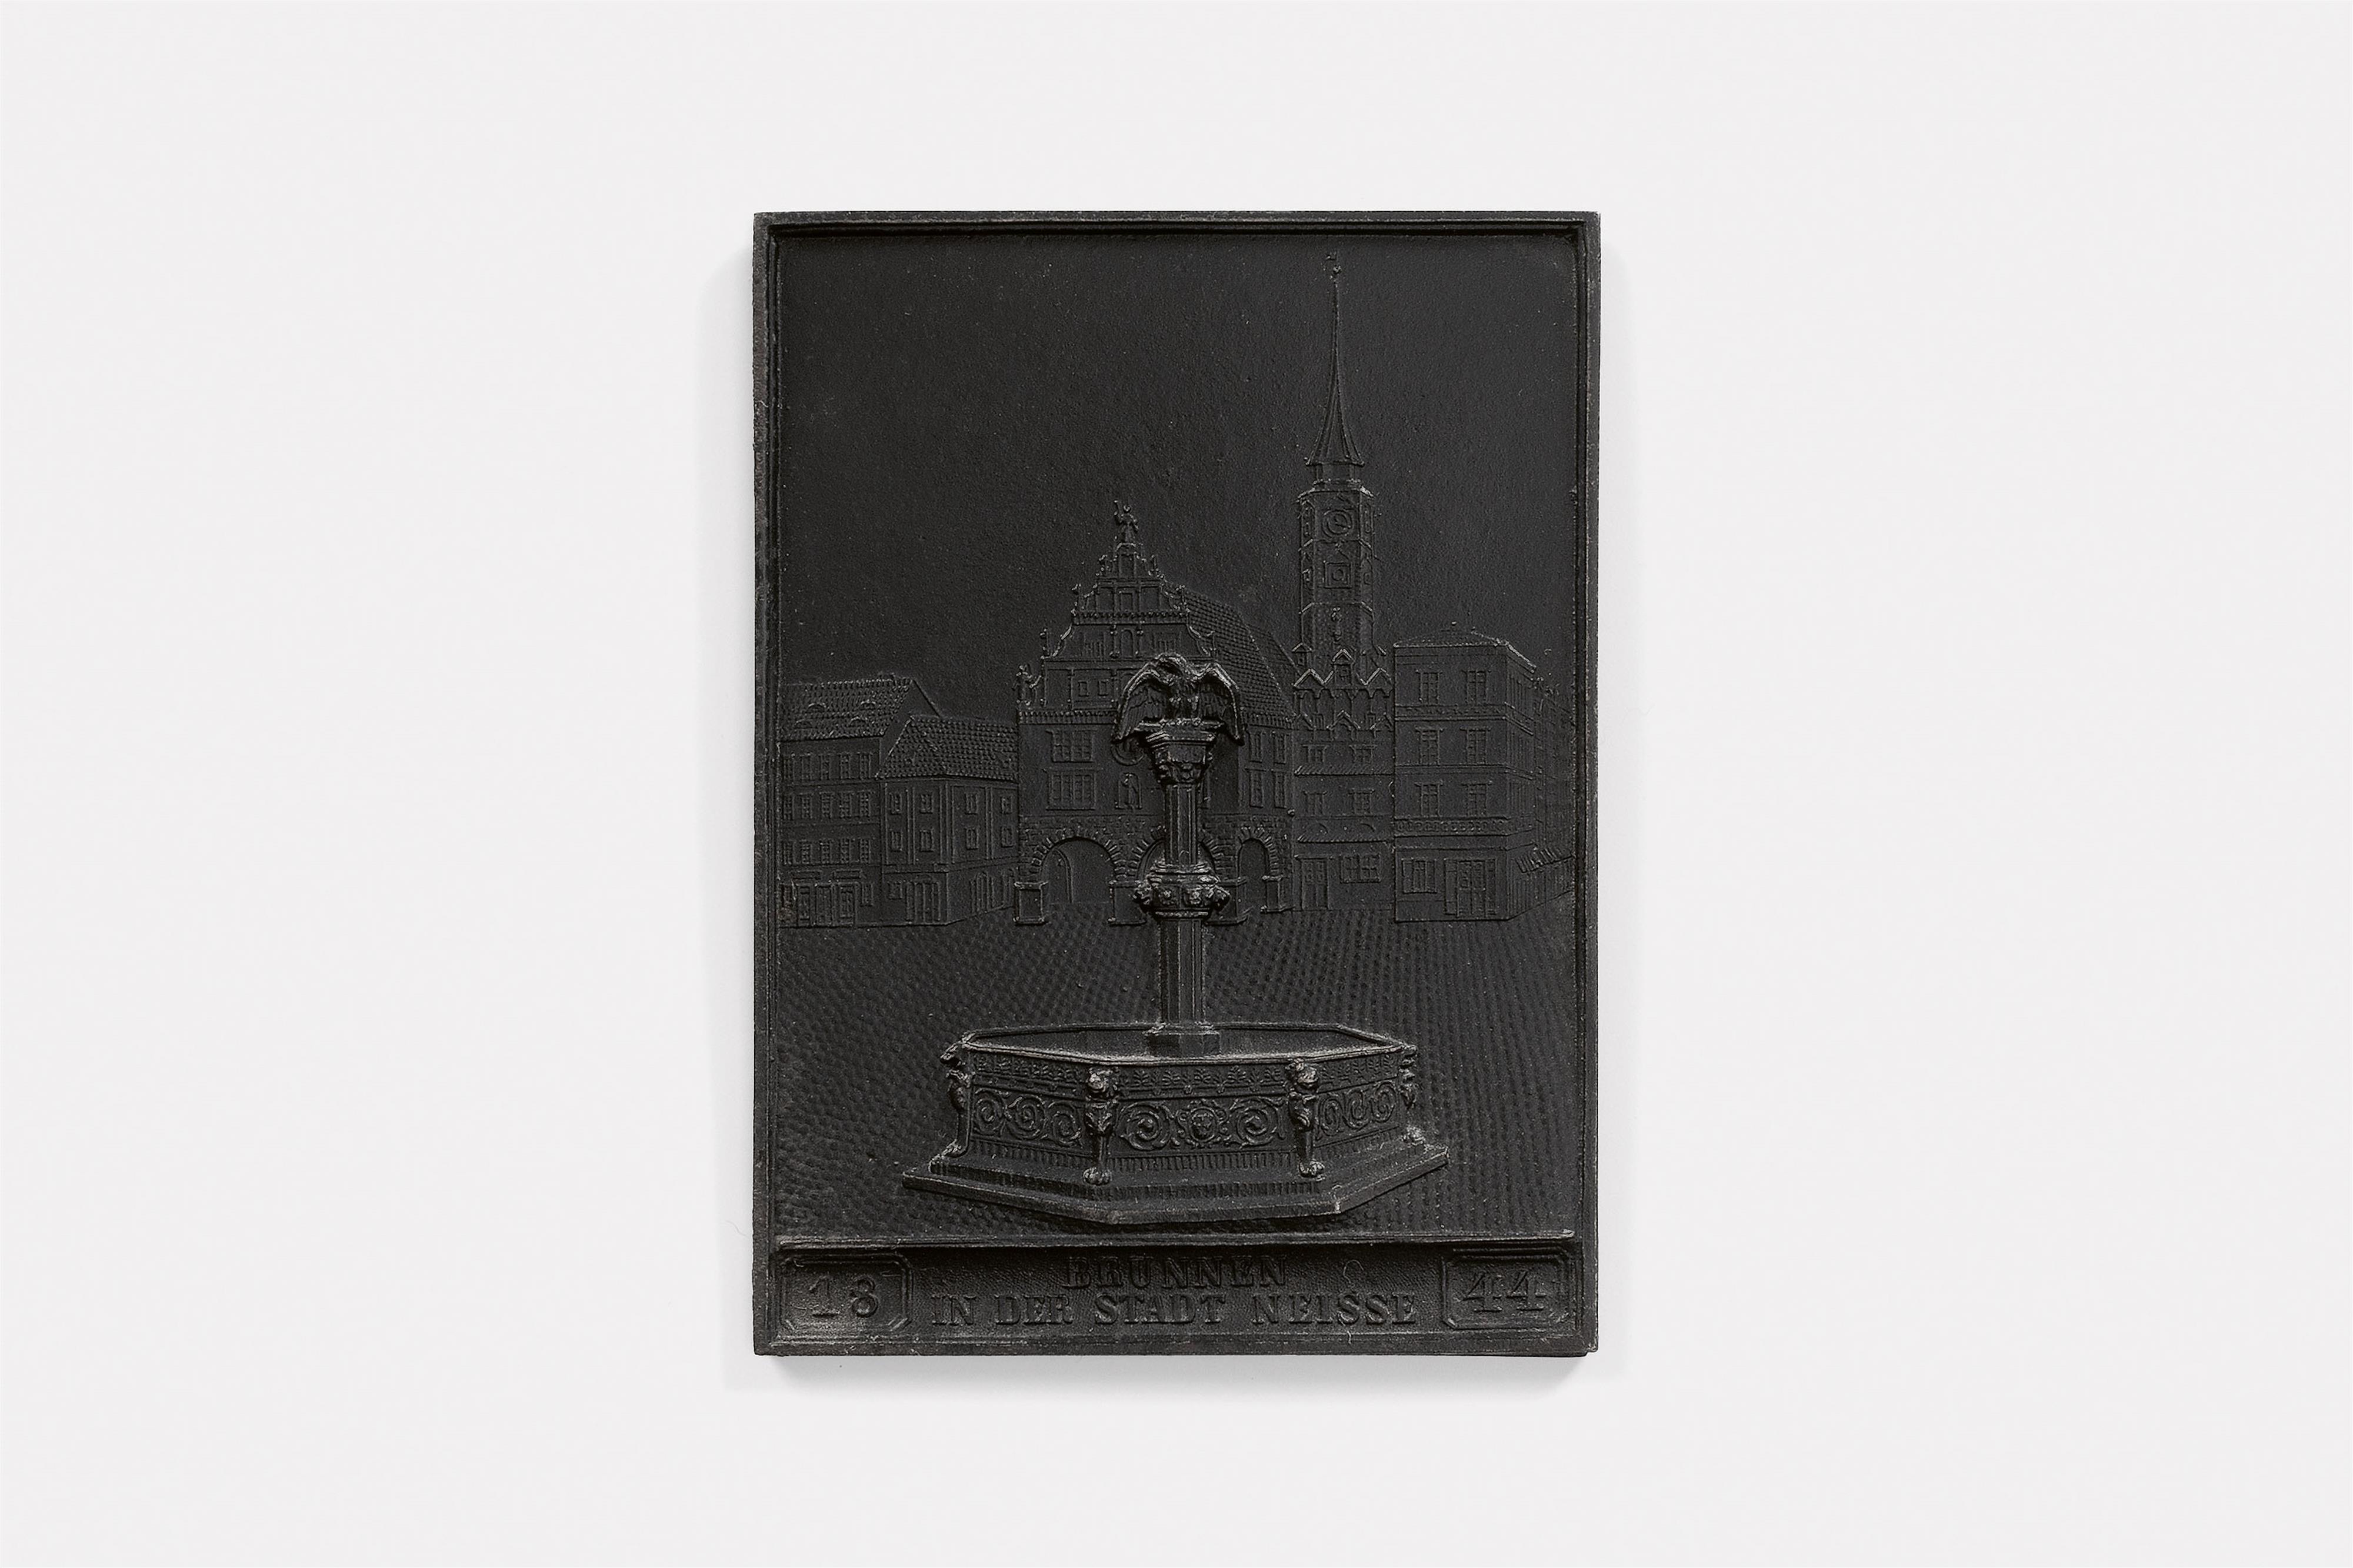 A cast iron New Year's plaque inscribed "1844 BRUNNEN IN DER STADT NEISSE" - image-1